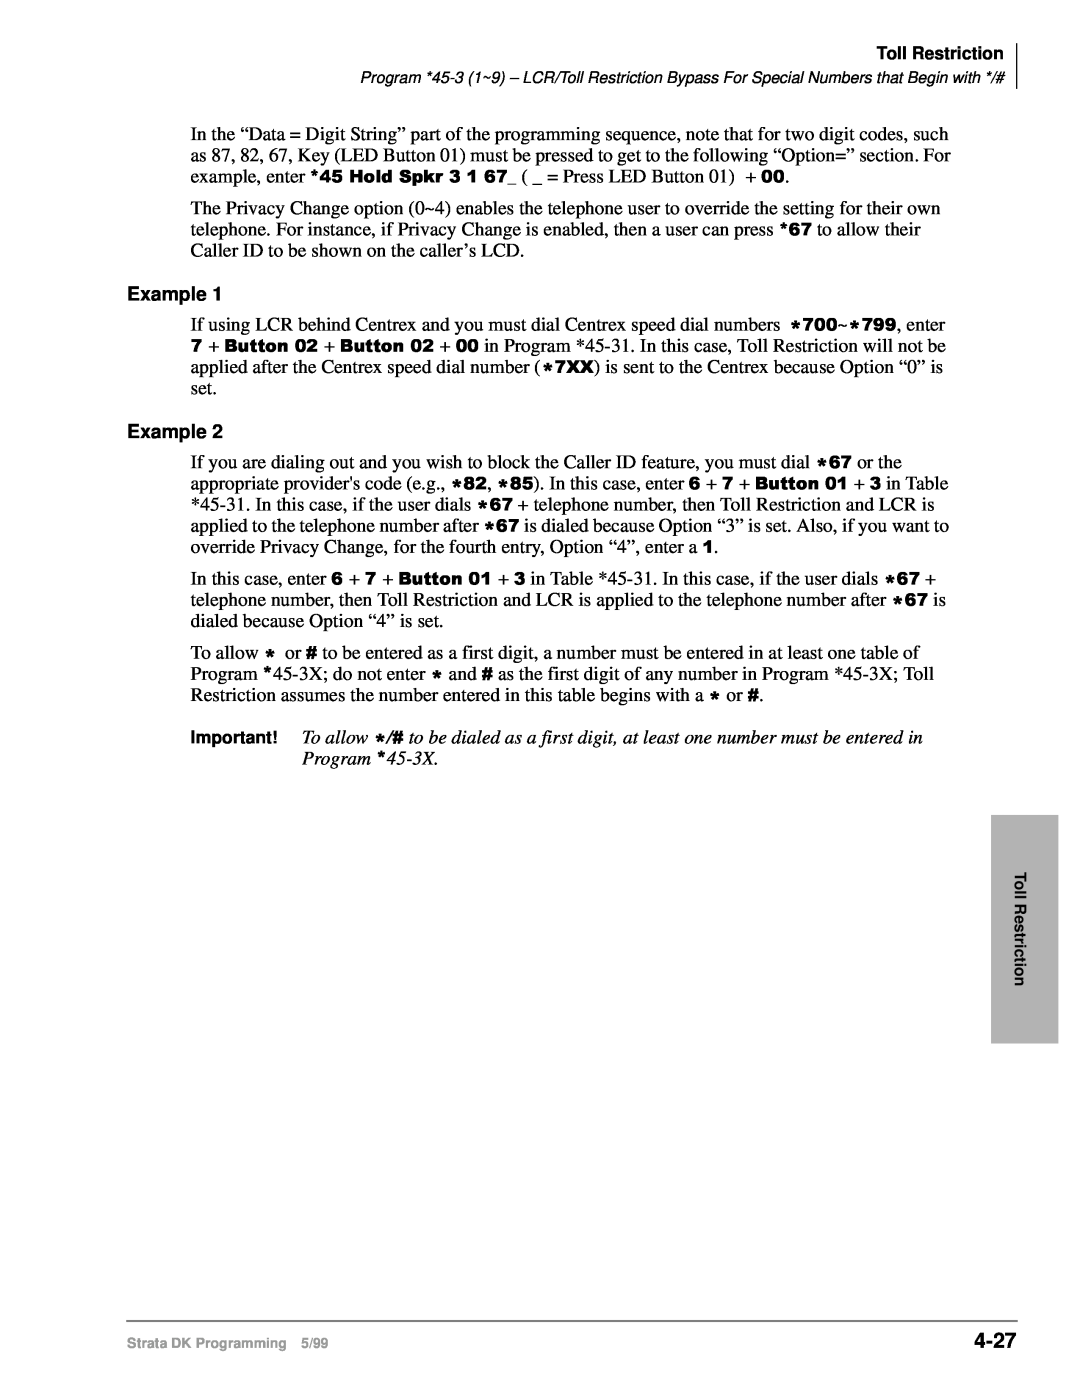 Toshiba dk14 manual 4-27, Example 